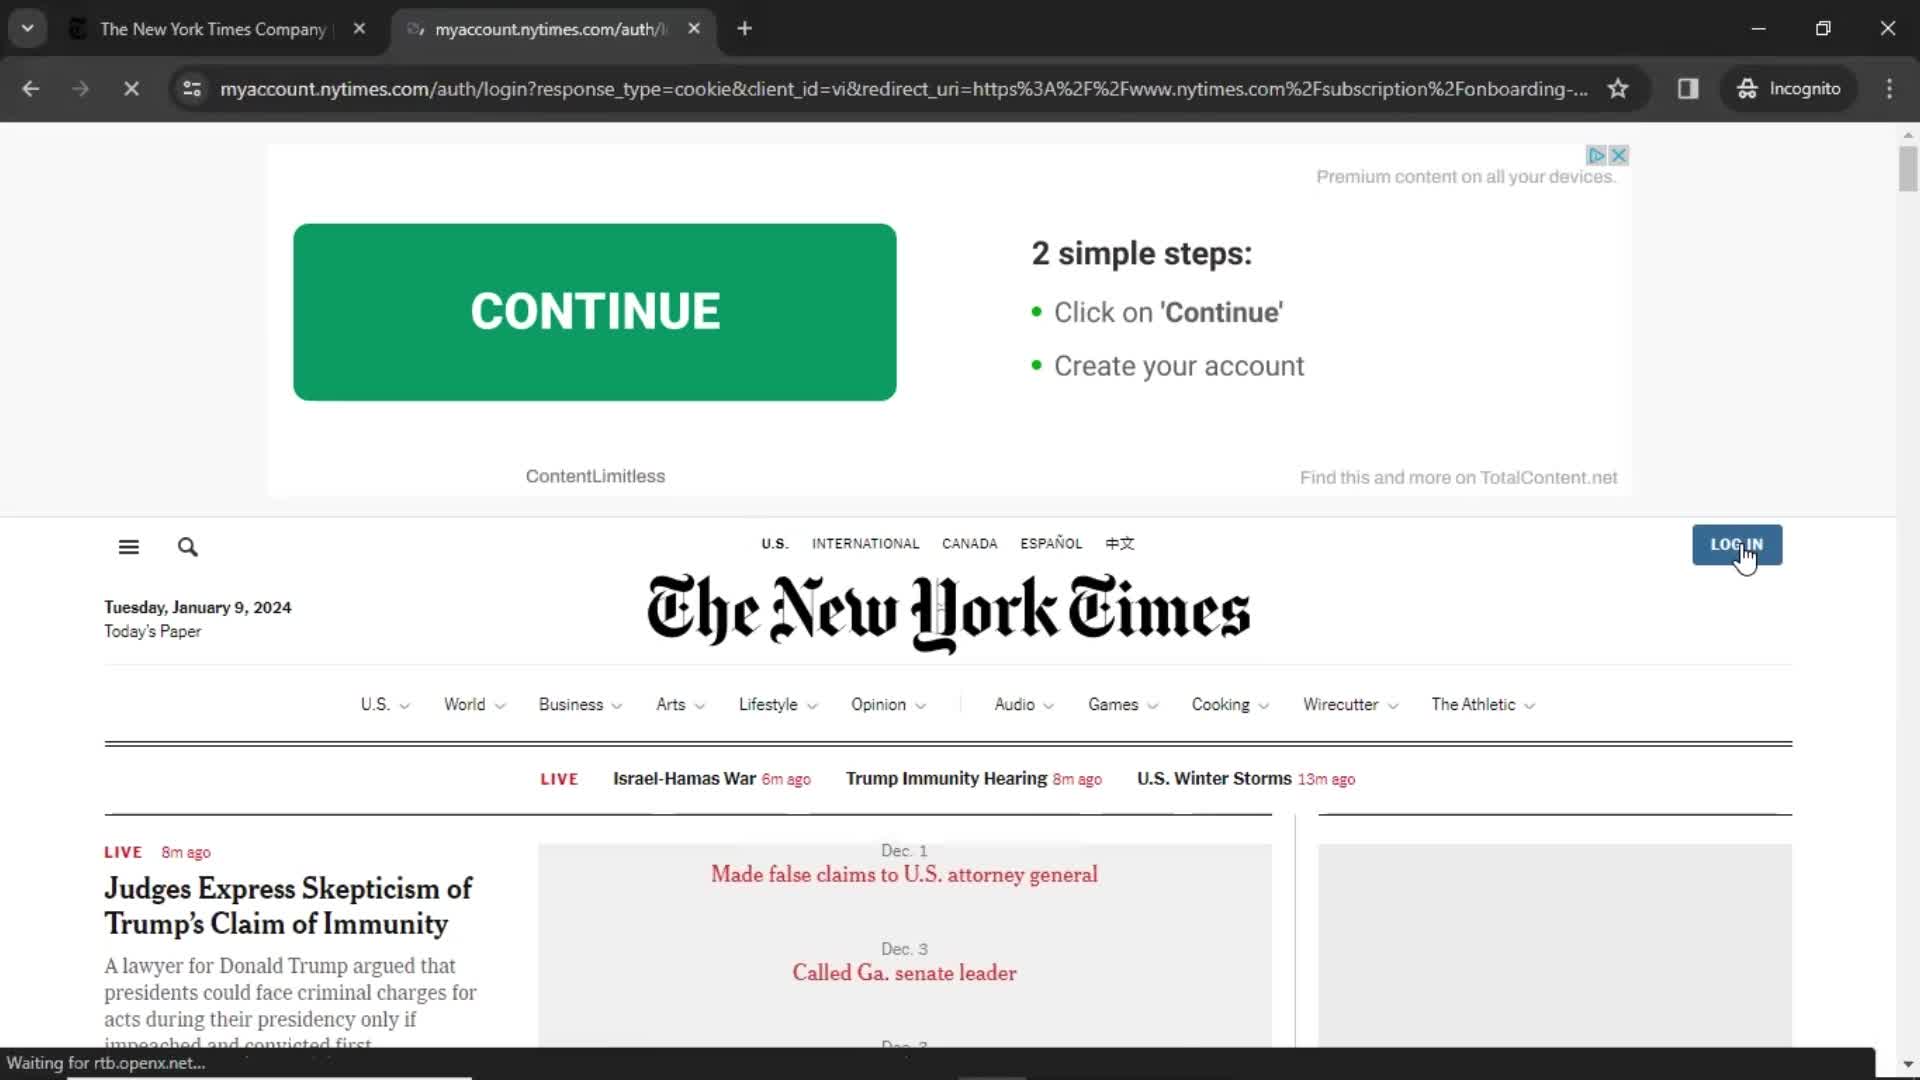 The New York Times homepage screenshot